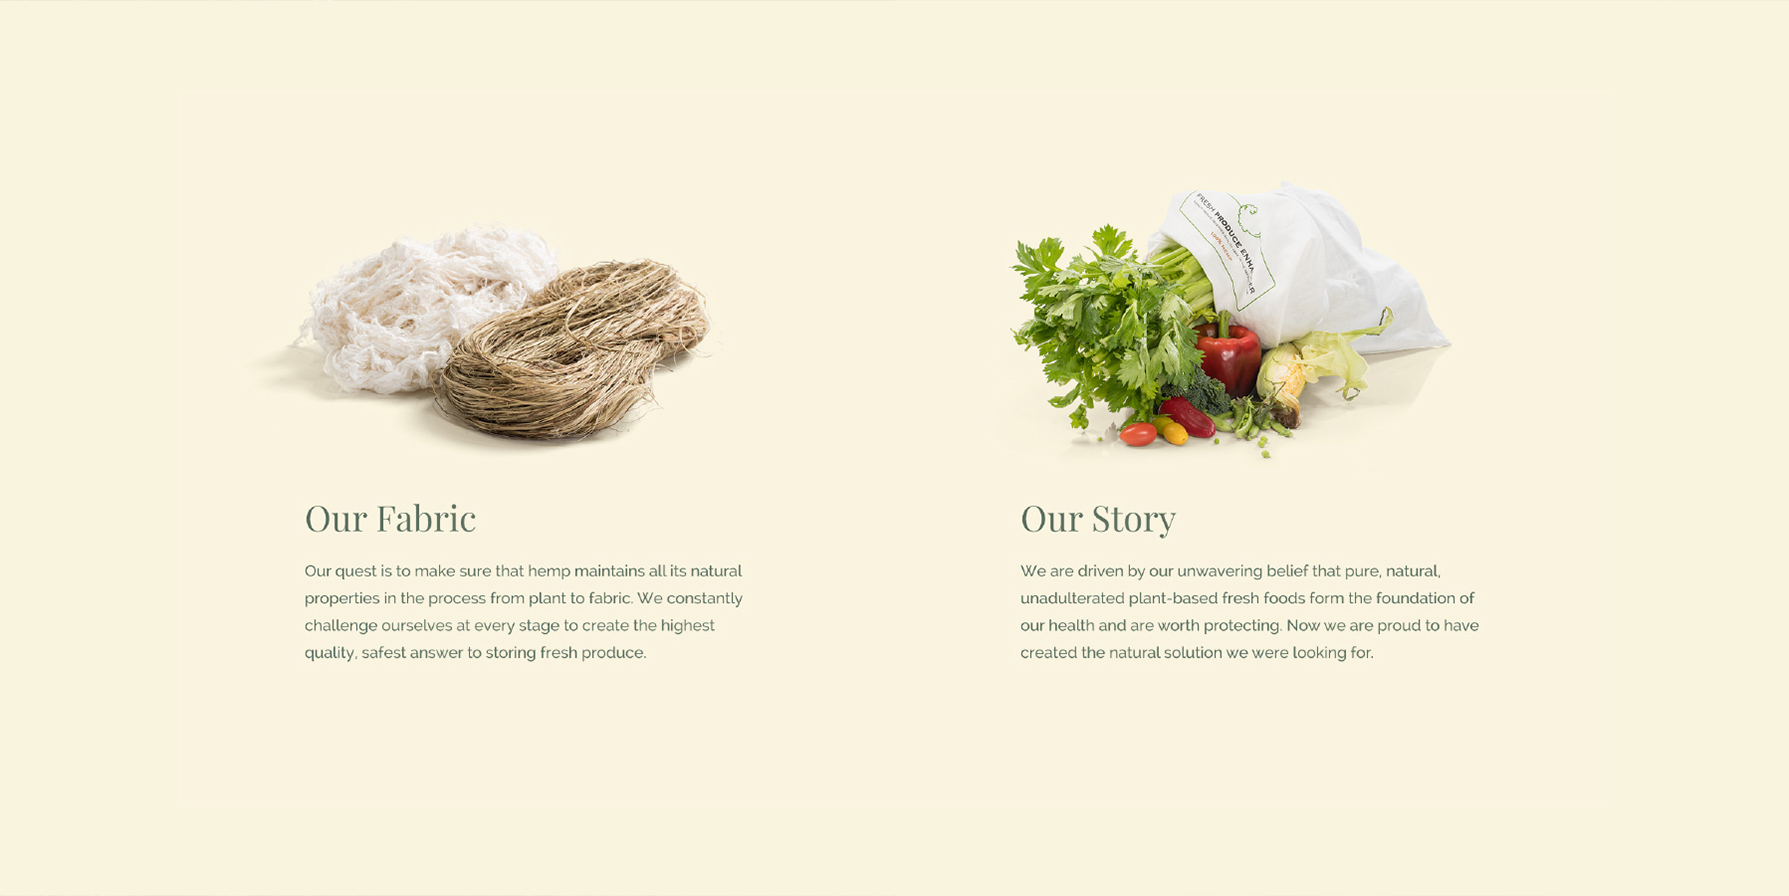 Stored Naturally e commerce website design by Kaliber Studio